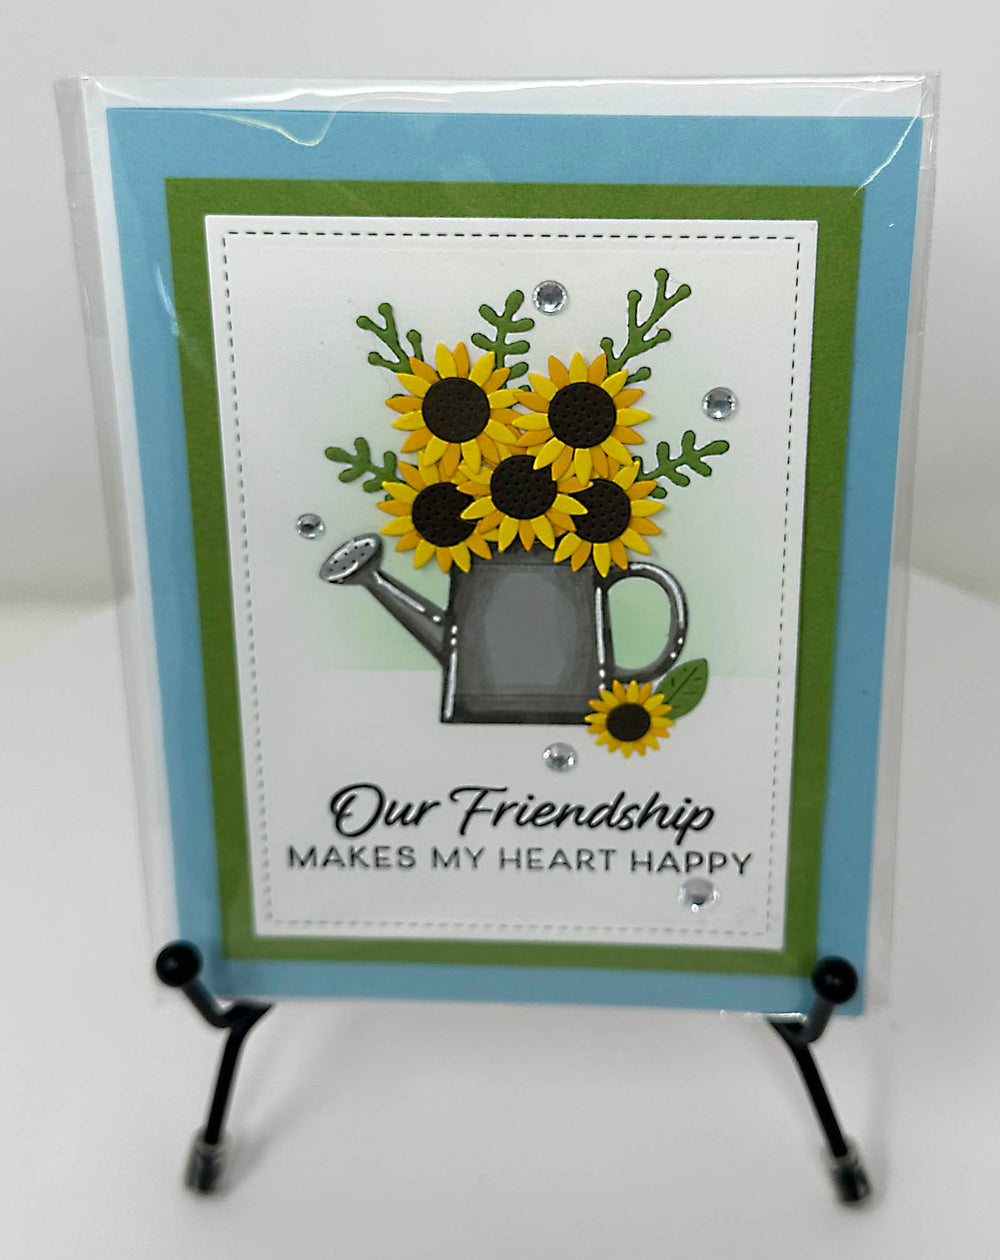 Our Friendship Card